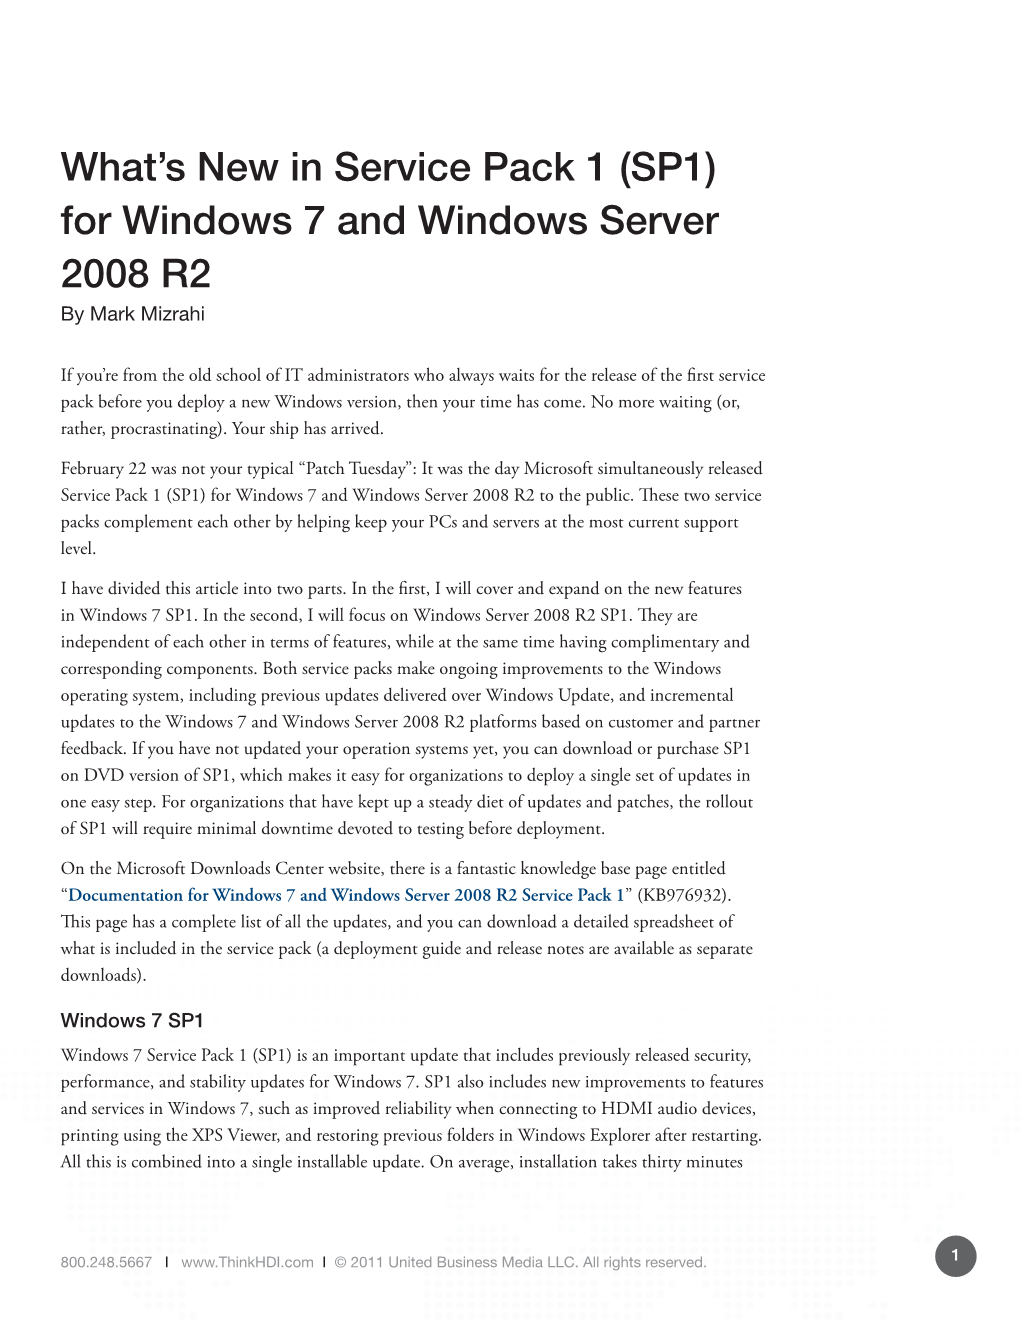 (SP1) for Windows 7 and Windows Server 2008 R2 by Mark Mizrahi